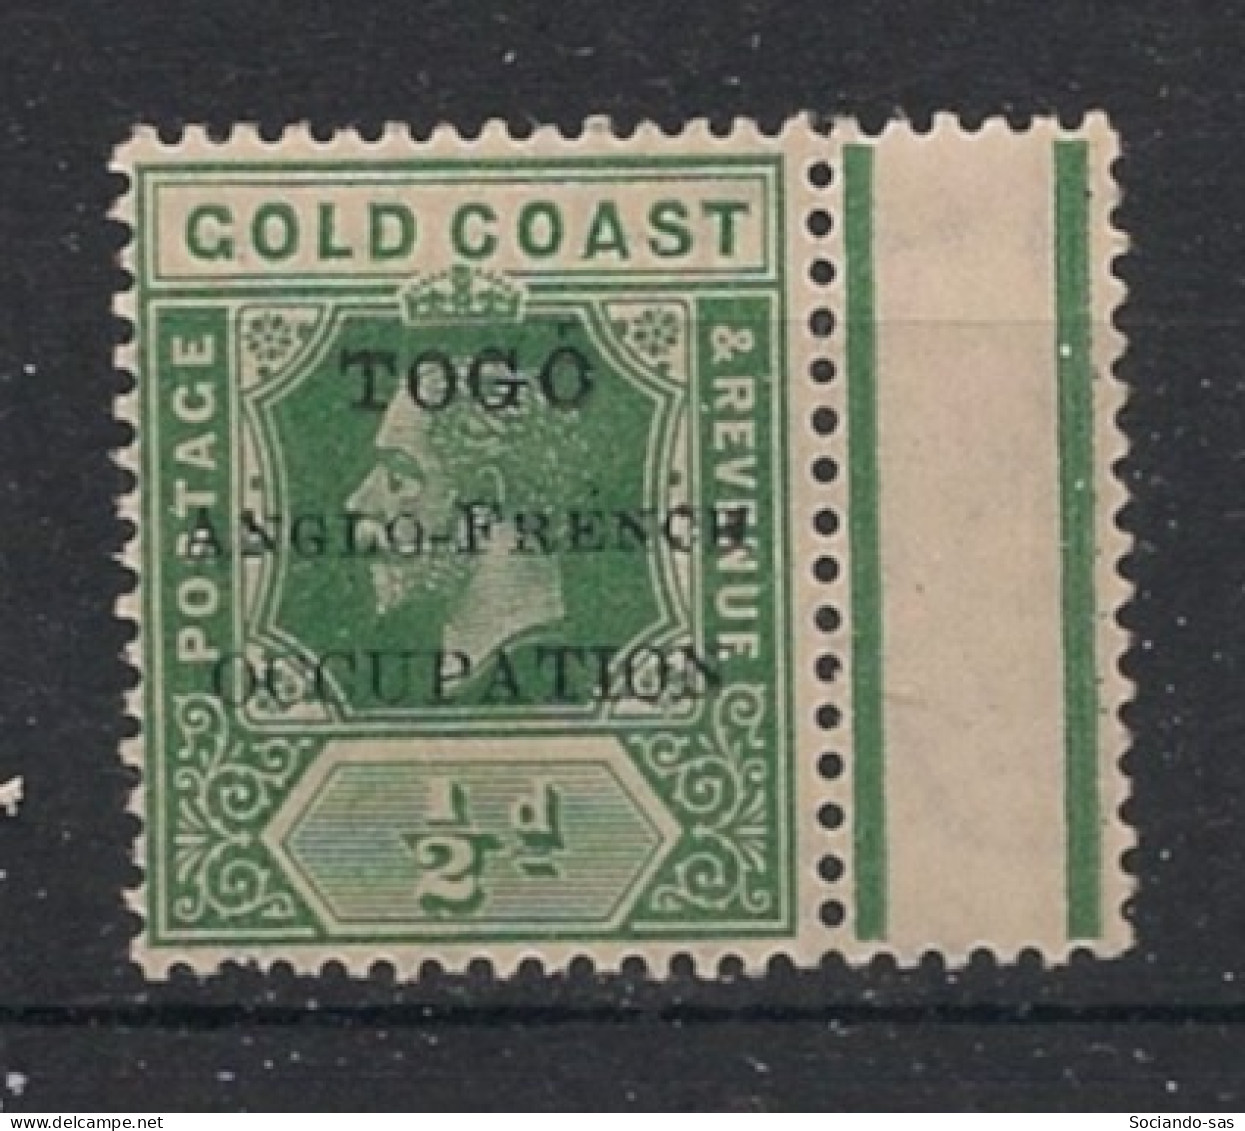 TOGO - 1915 - N°YT. 59 - Gold Coast 1/2p Vert - Neuf Luxe** / MNH / Postfrisch - Unused Stamps